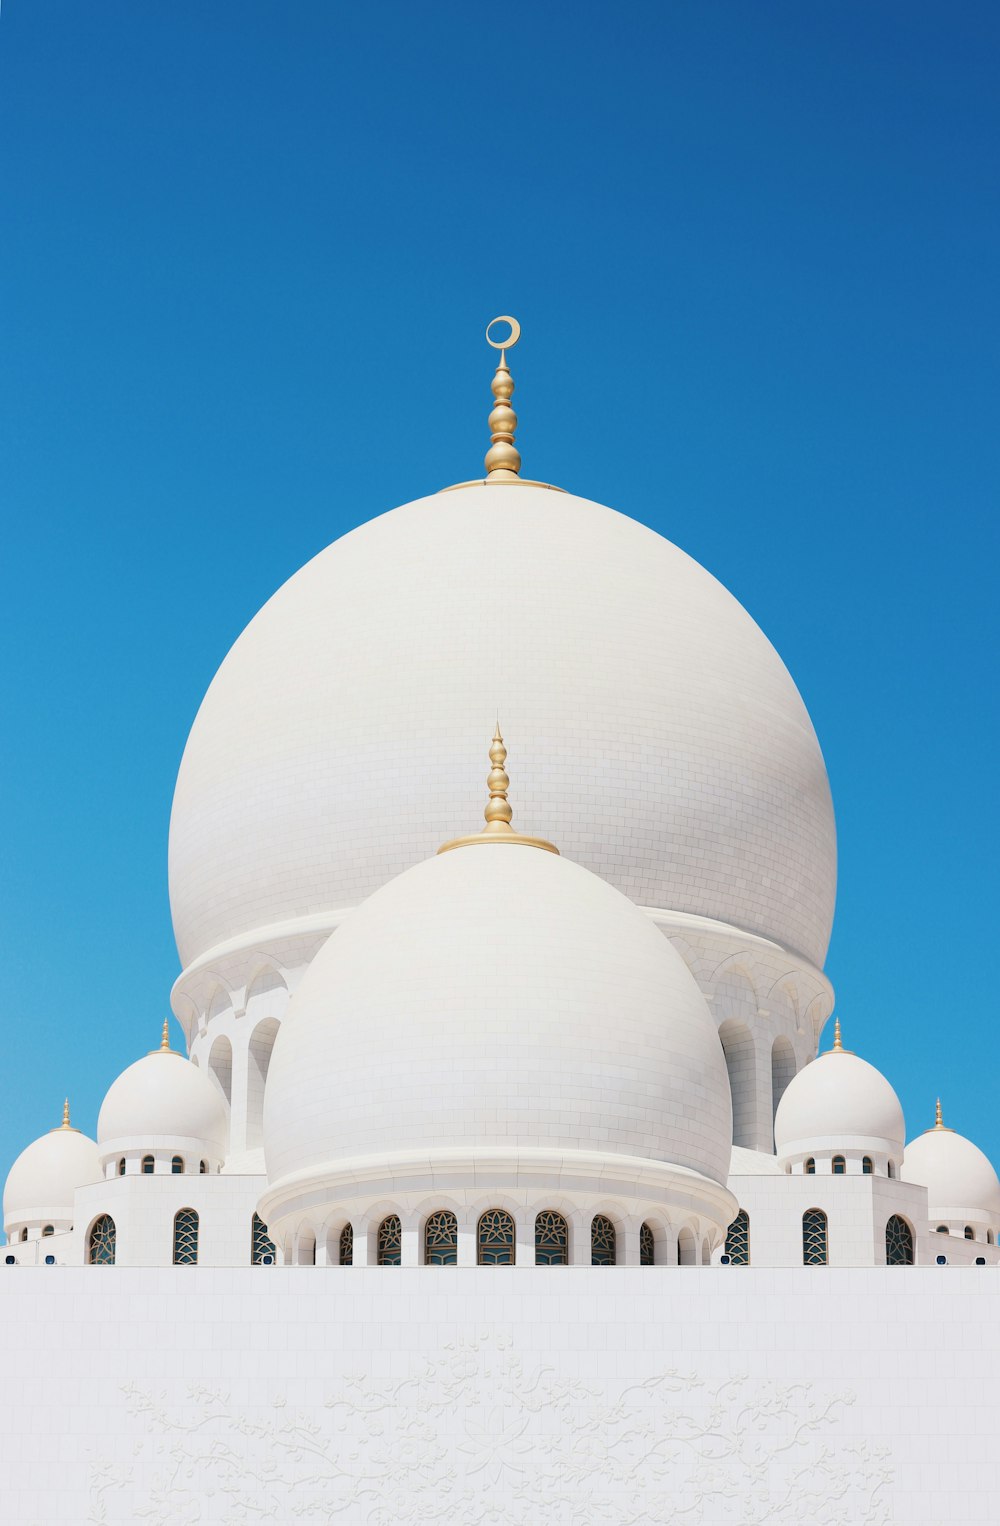 mosquée en béton blanc